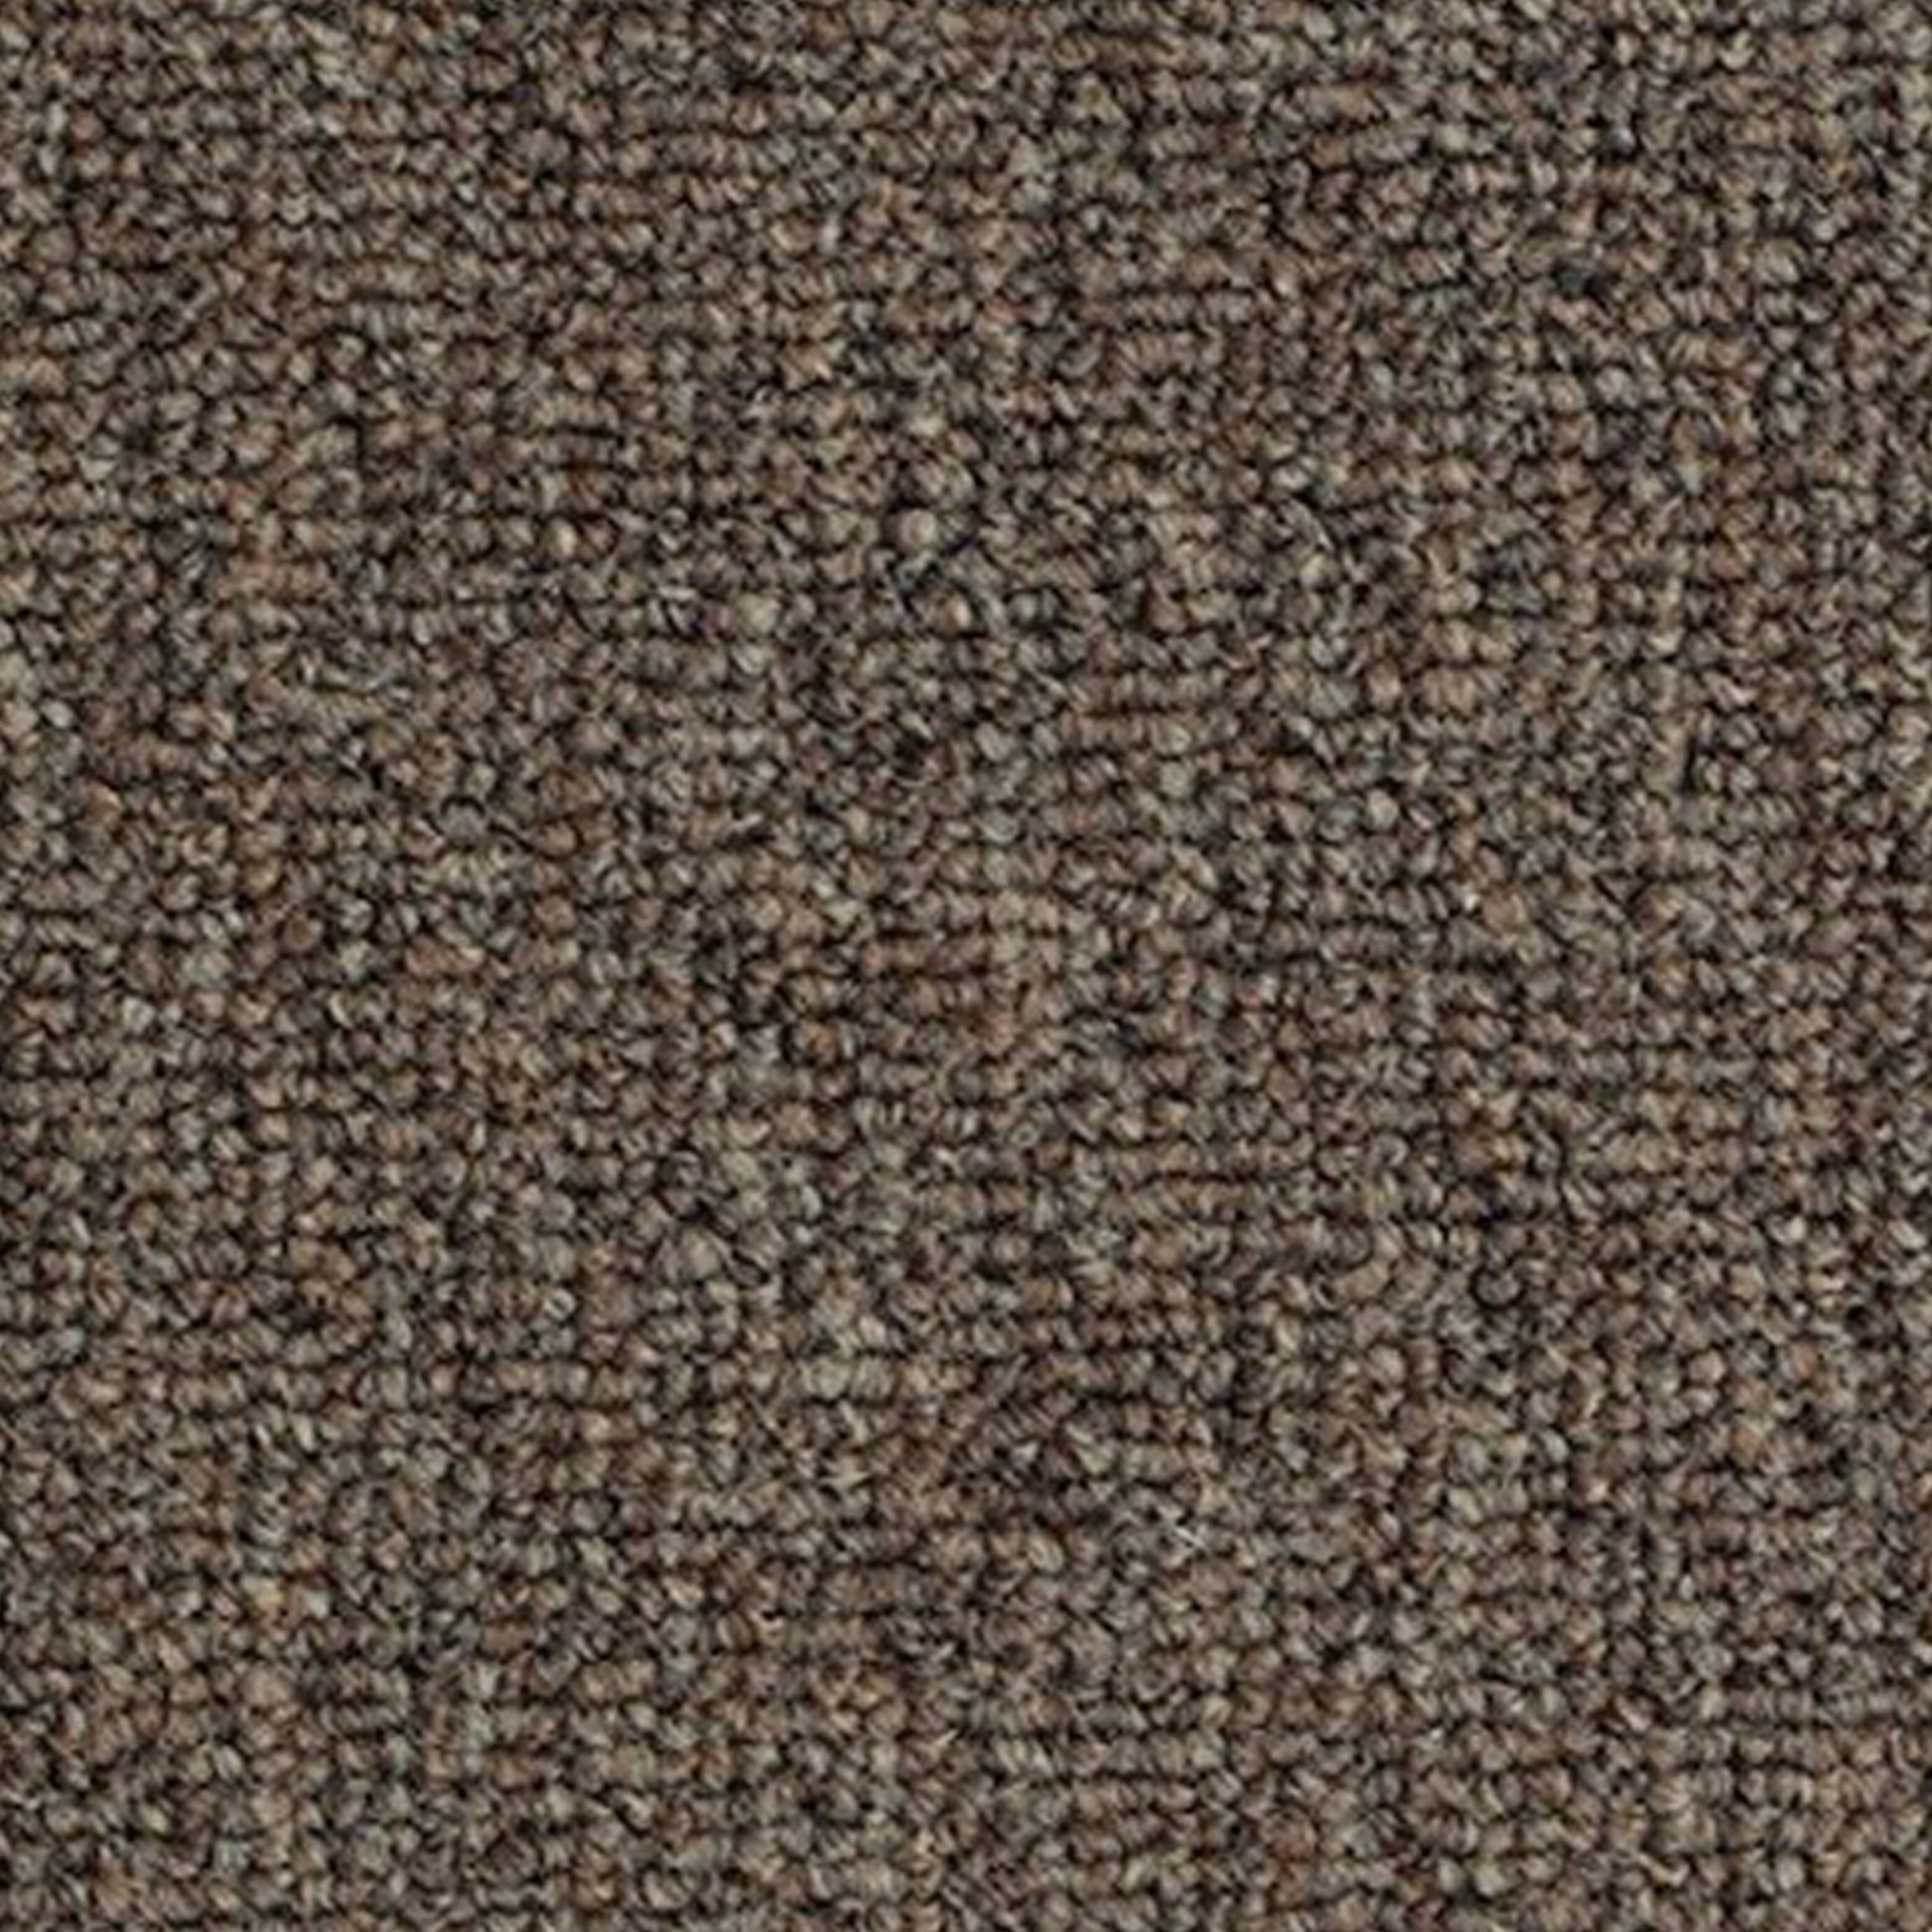 Fusion 20 Polypropylene Carpet Collection Polypropylene Carpet by KLD Home